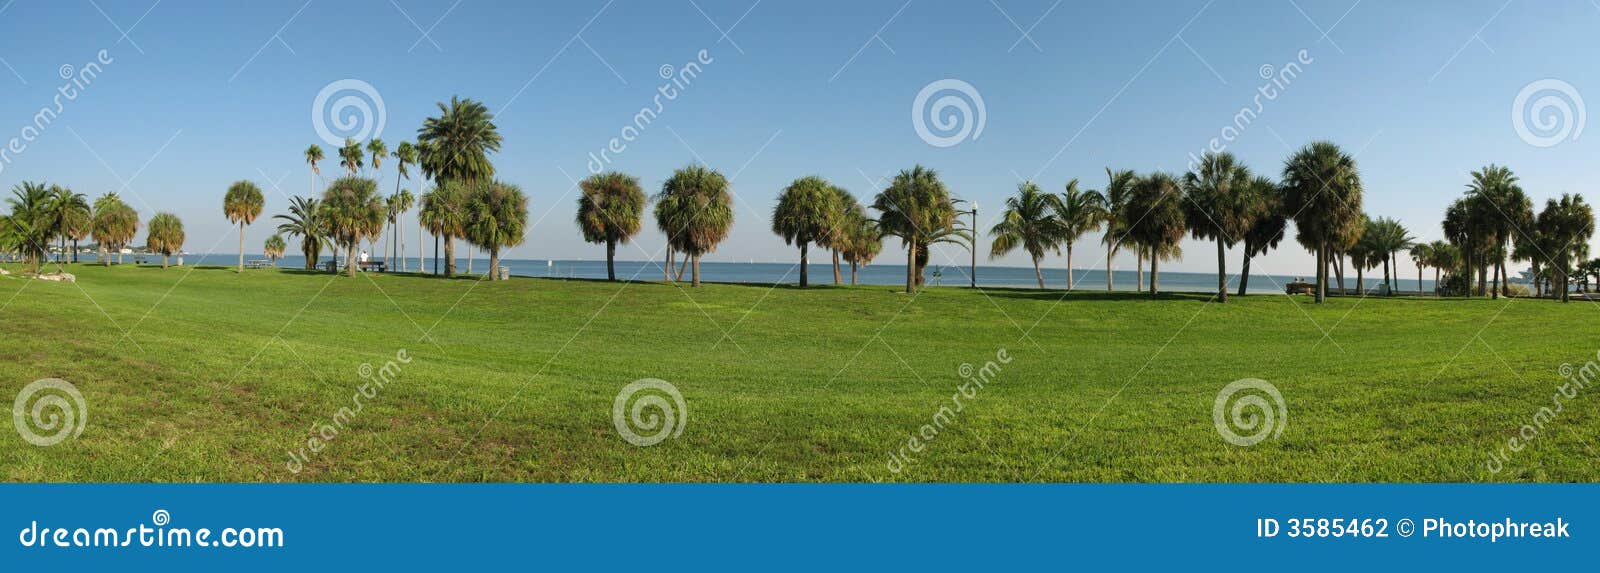 palms along florida coastline